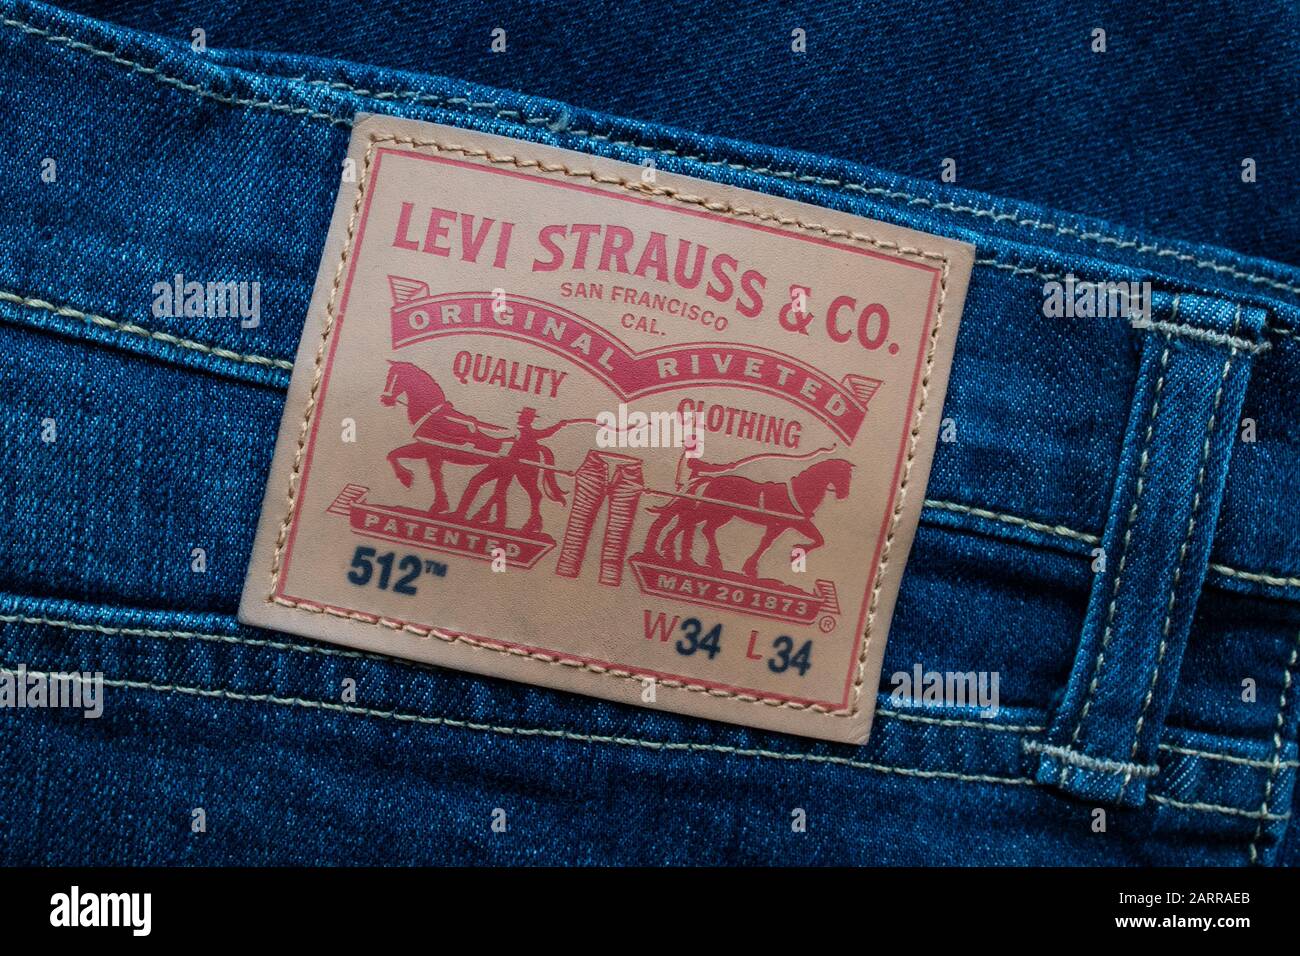 levi strauss & co jeans label Stock Photo - Alamy